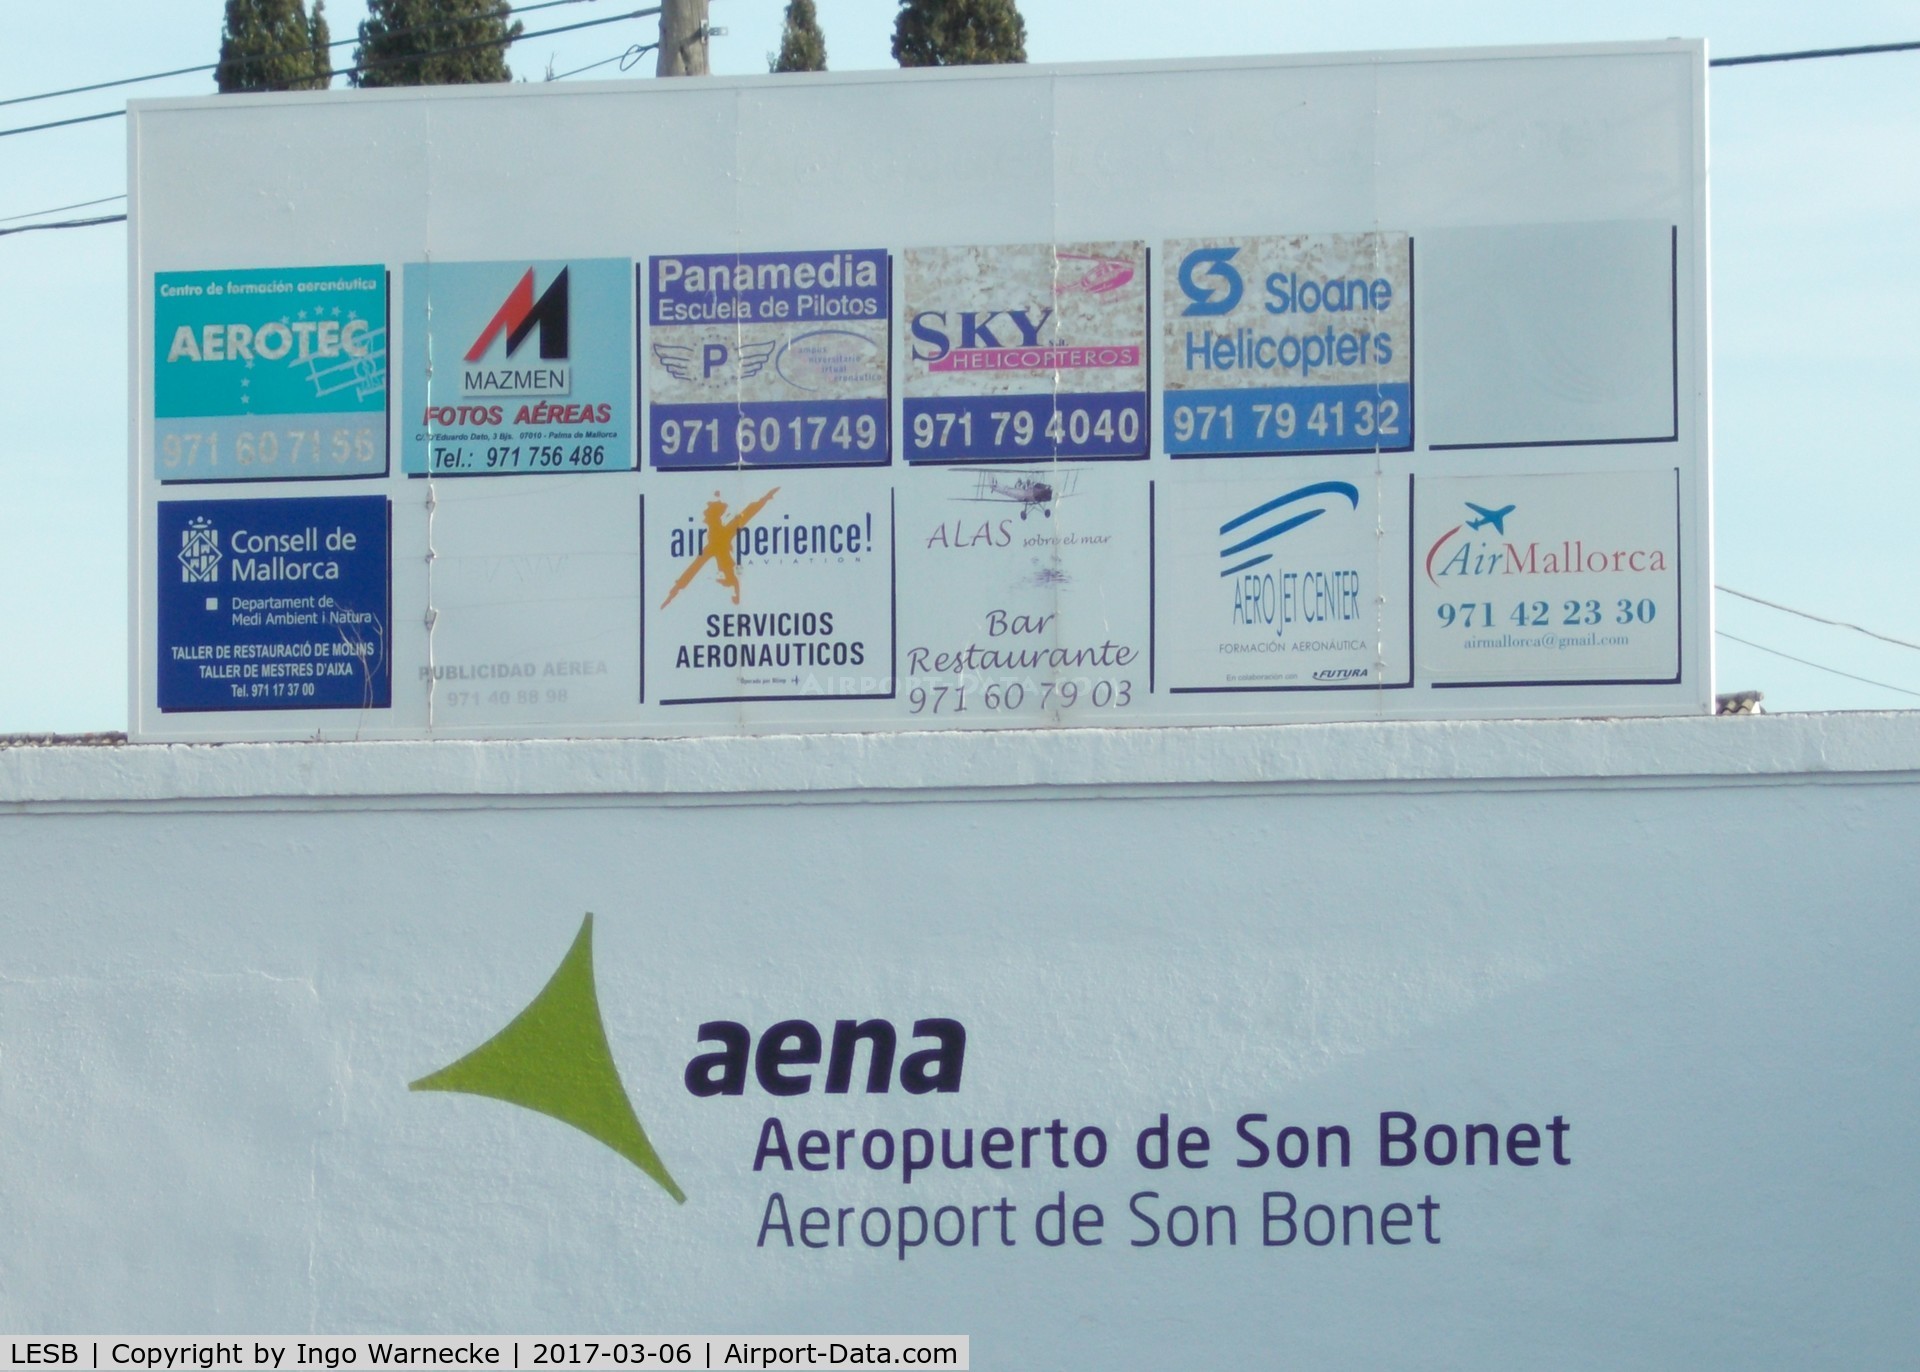 Son Bonet Aerodrome Airport, Palma de Mallorca Spain (LESB) - entry to Son Bonet airport, Mallorca